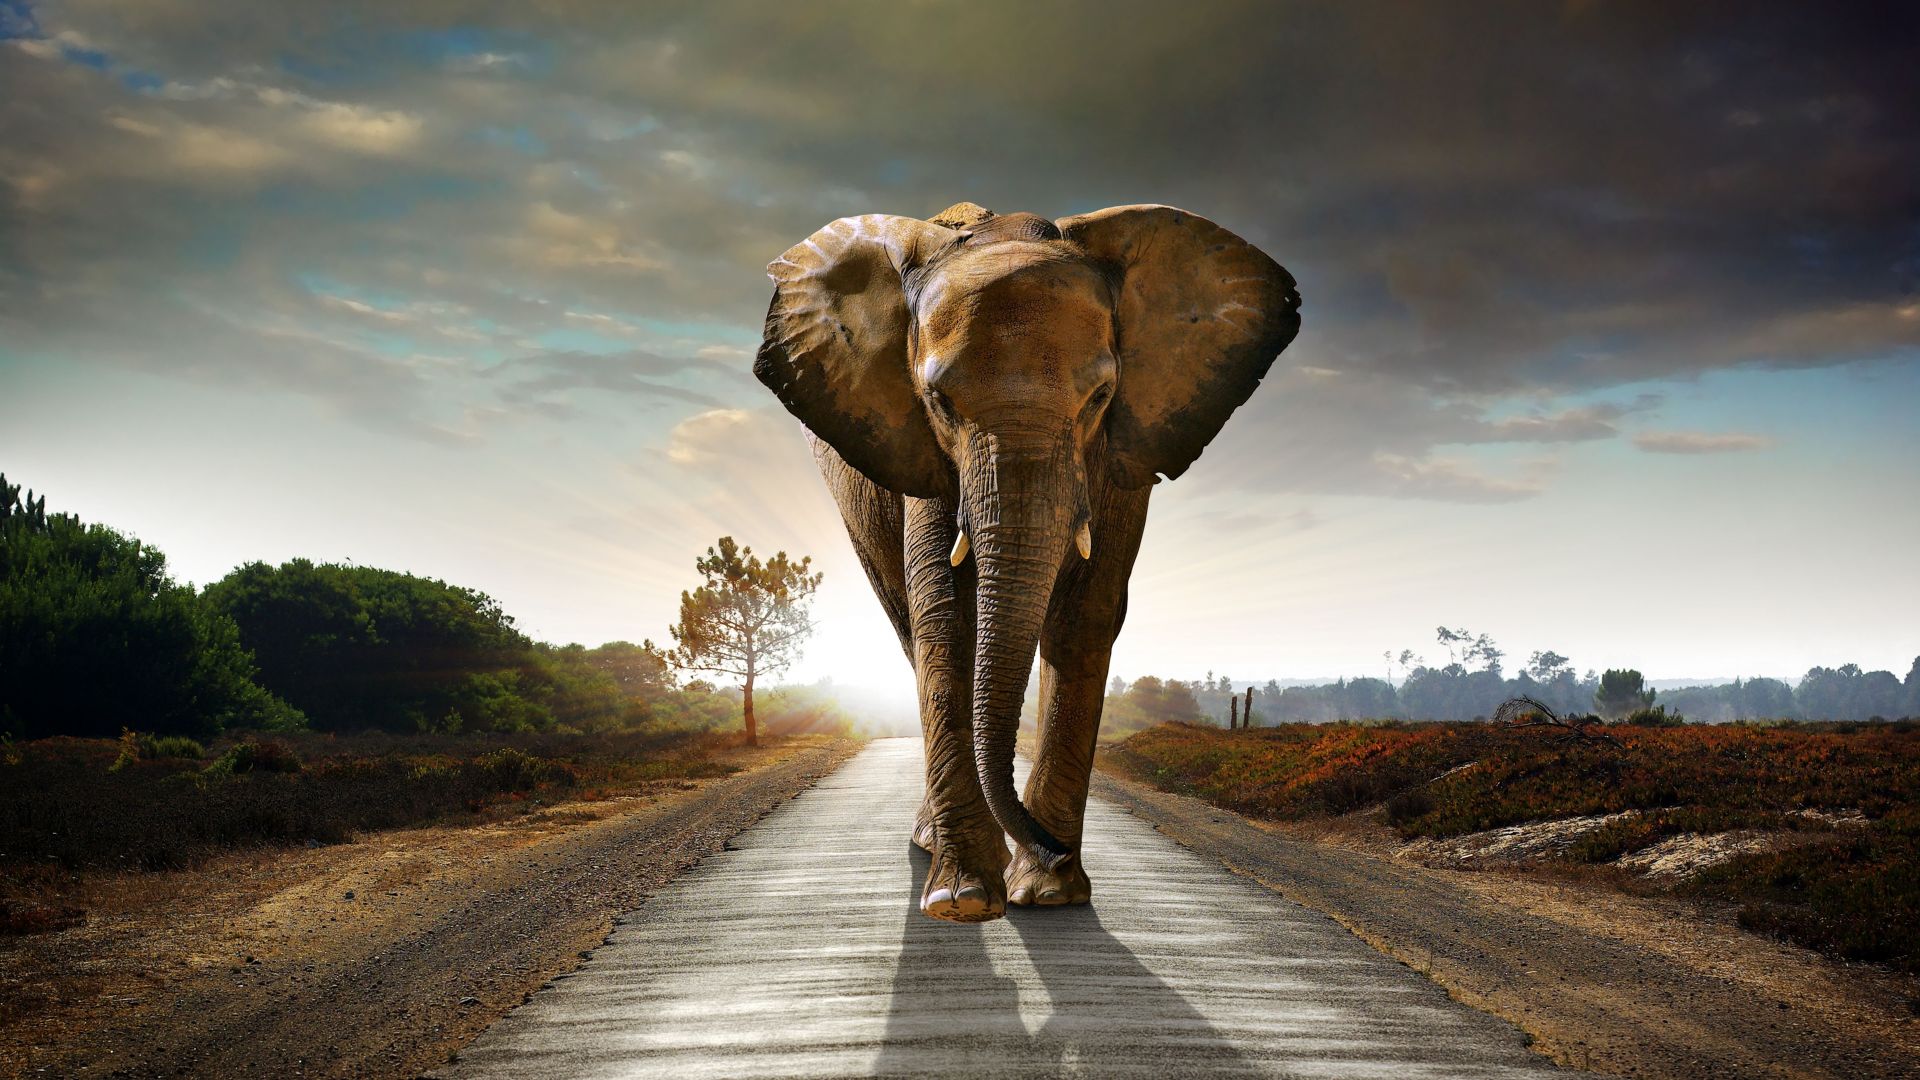 Desktop Wallpaper Elephant, Walking On The Road, Animal, 8k, Hd Image,  Picture, Background, 9d309f